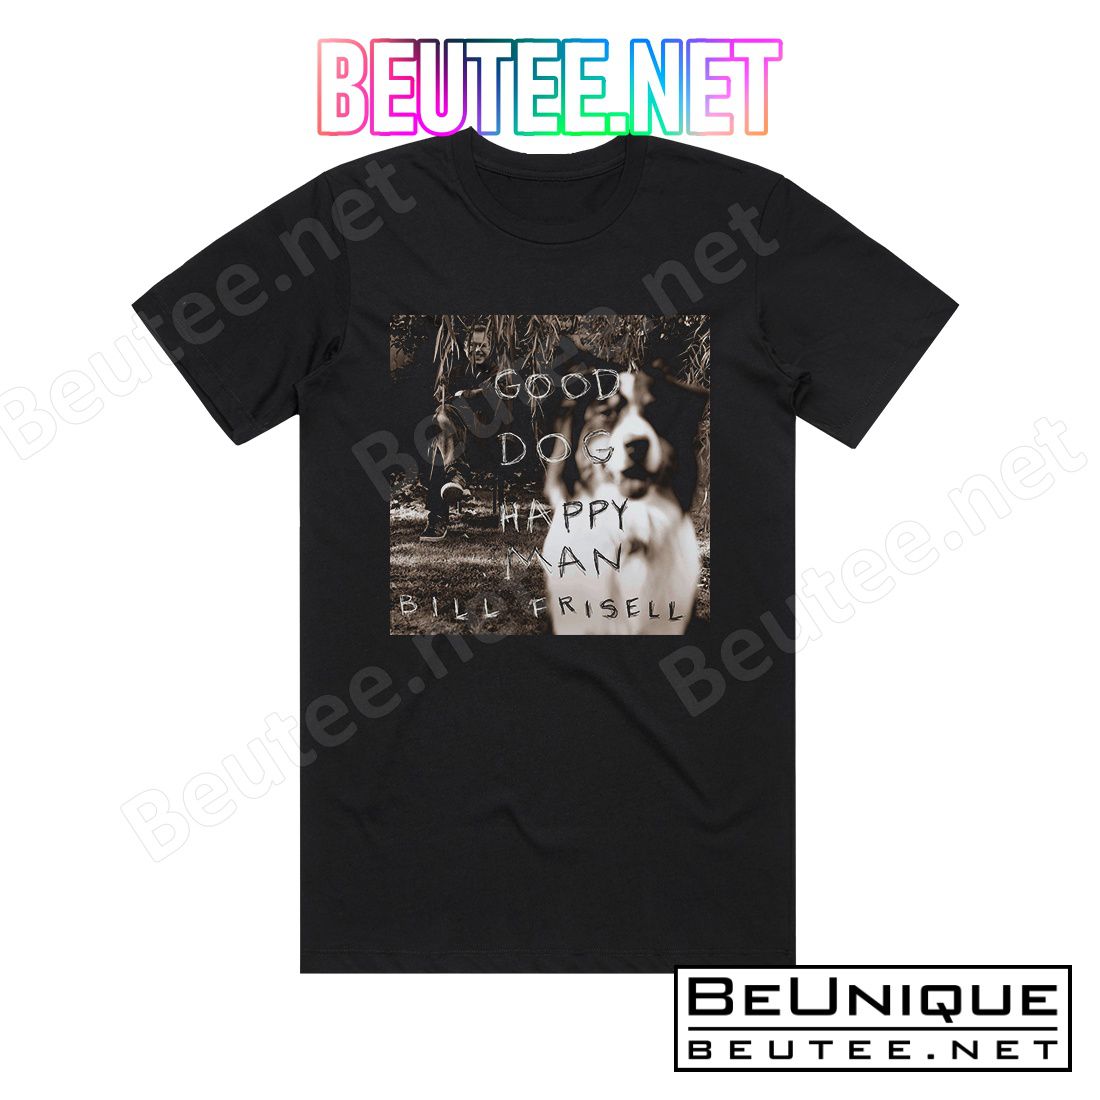 Bill Frisell Good Dog Happy Man Album Cover T-Shirt